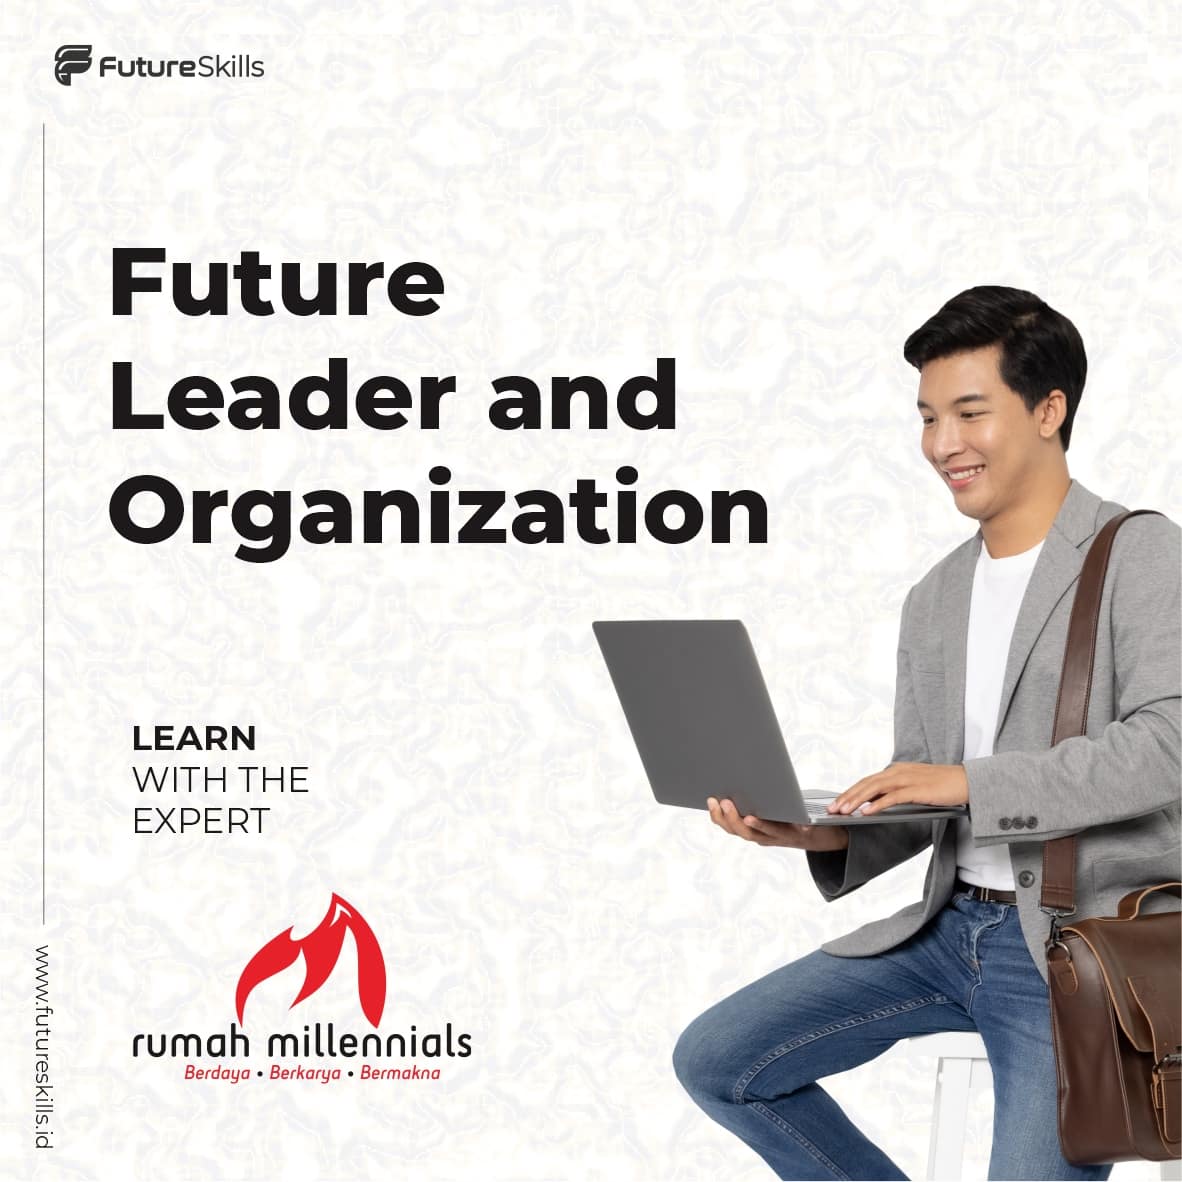 Future Skills Program "Future Leader and Organization"